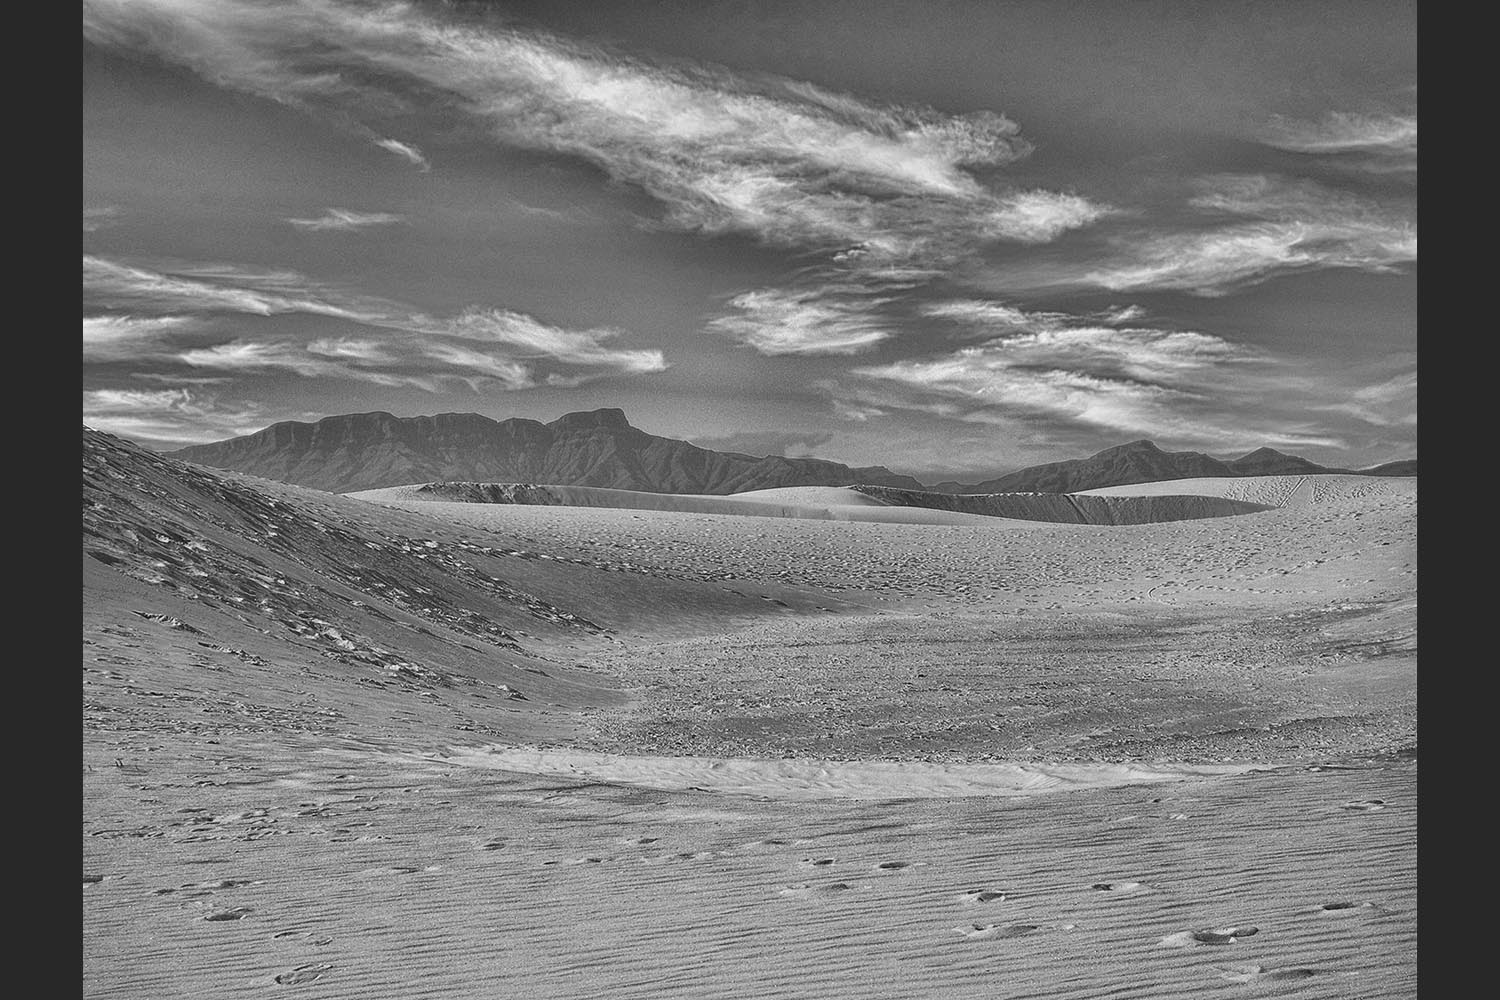 Jeff Driver: Desolation - White Sands, New Mexico